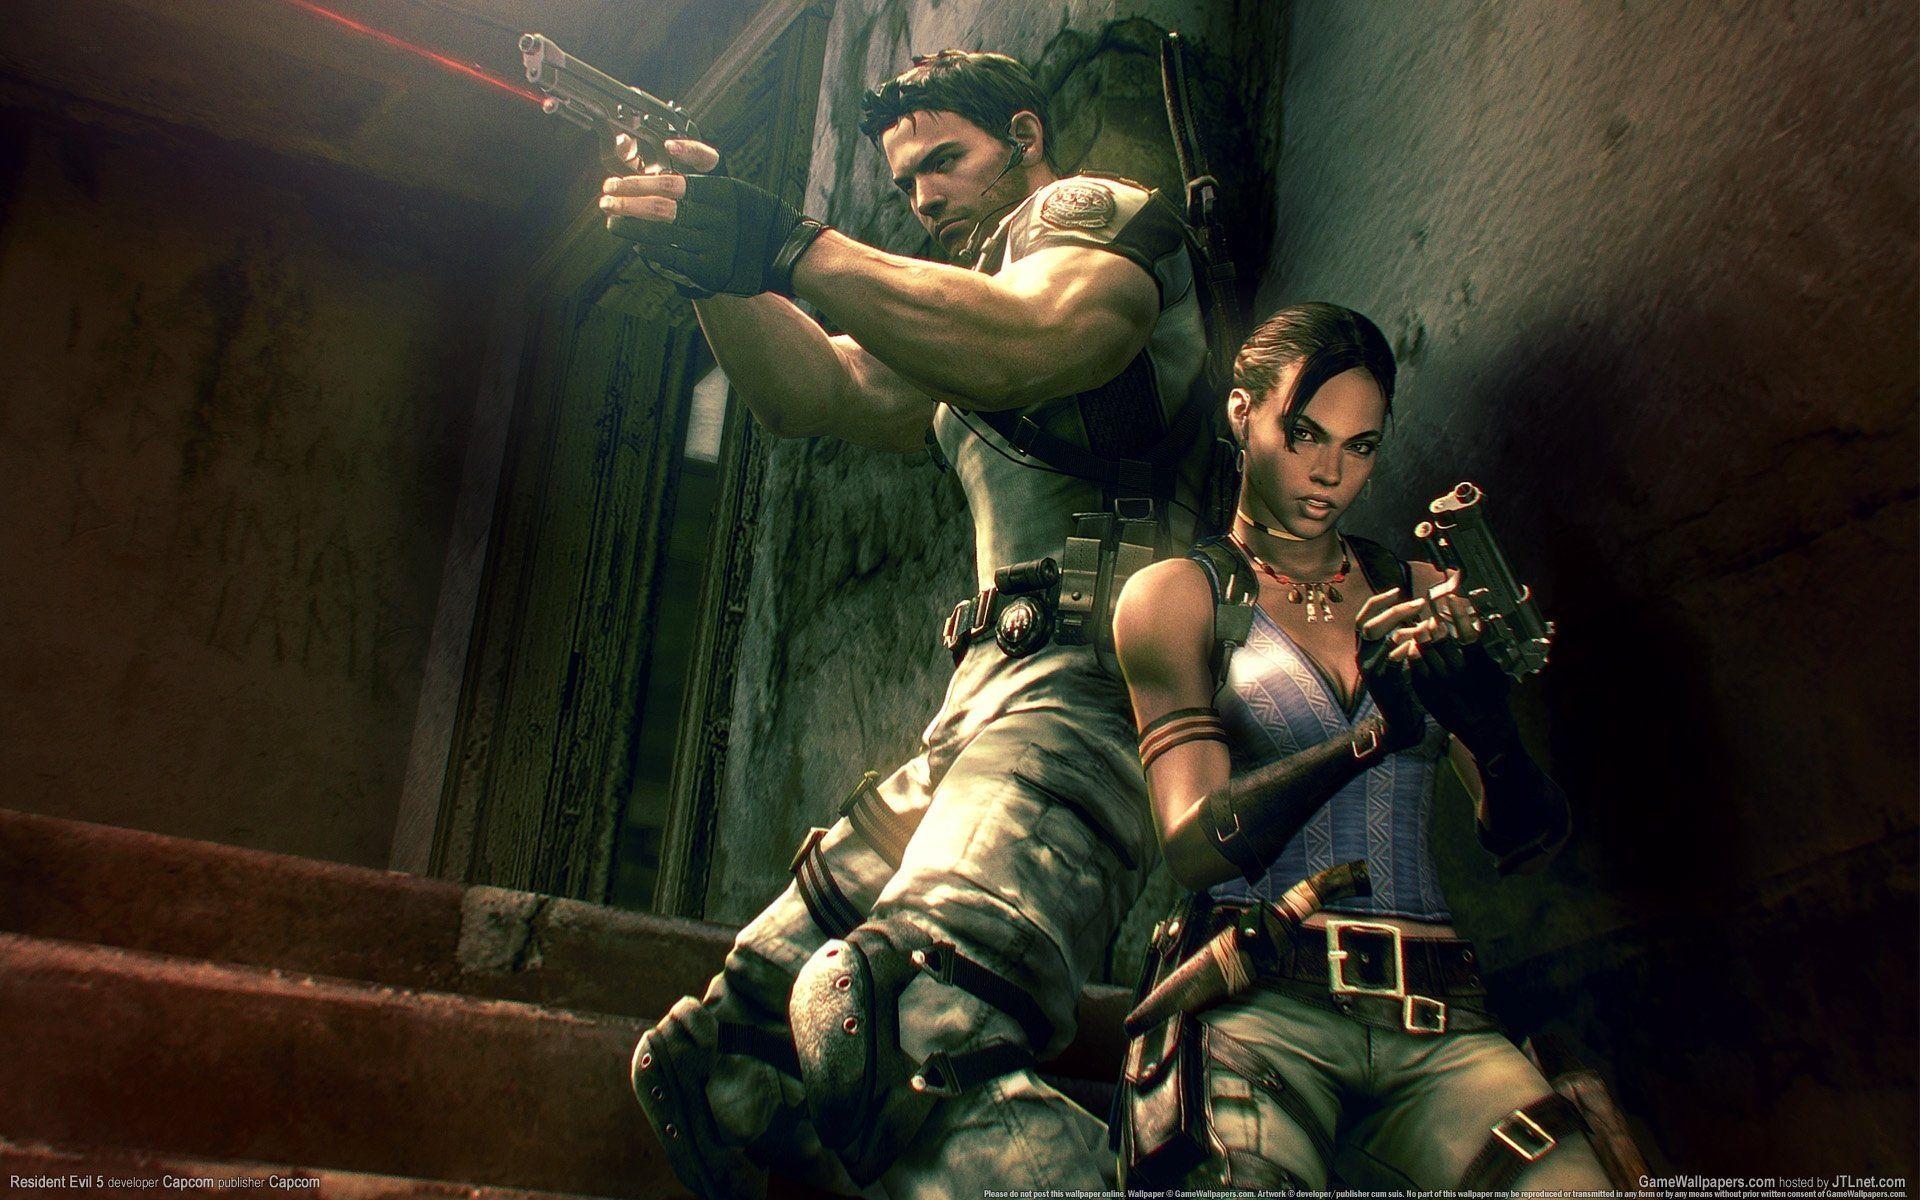 Resident Evil 5 Split Screen Co-op